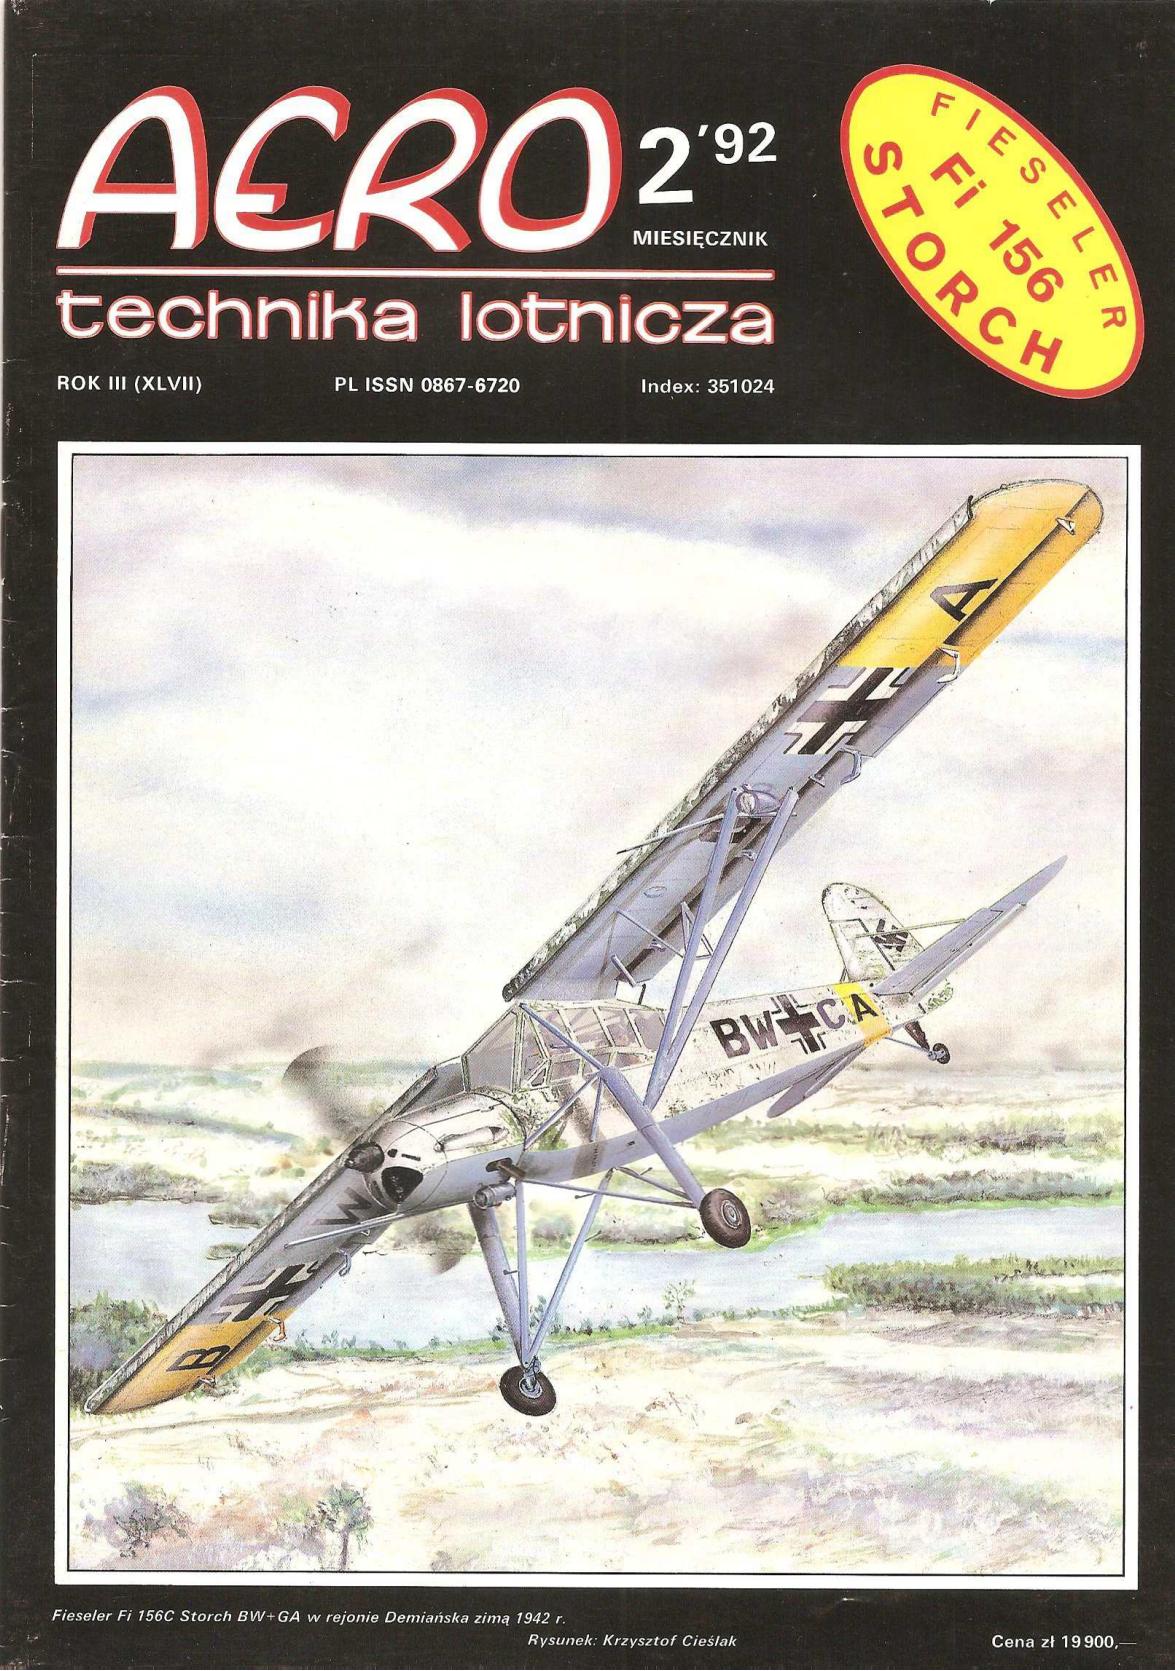 Aero Technika Lotnicza - Aero TL 1992-02 okładka.jpg